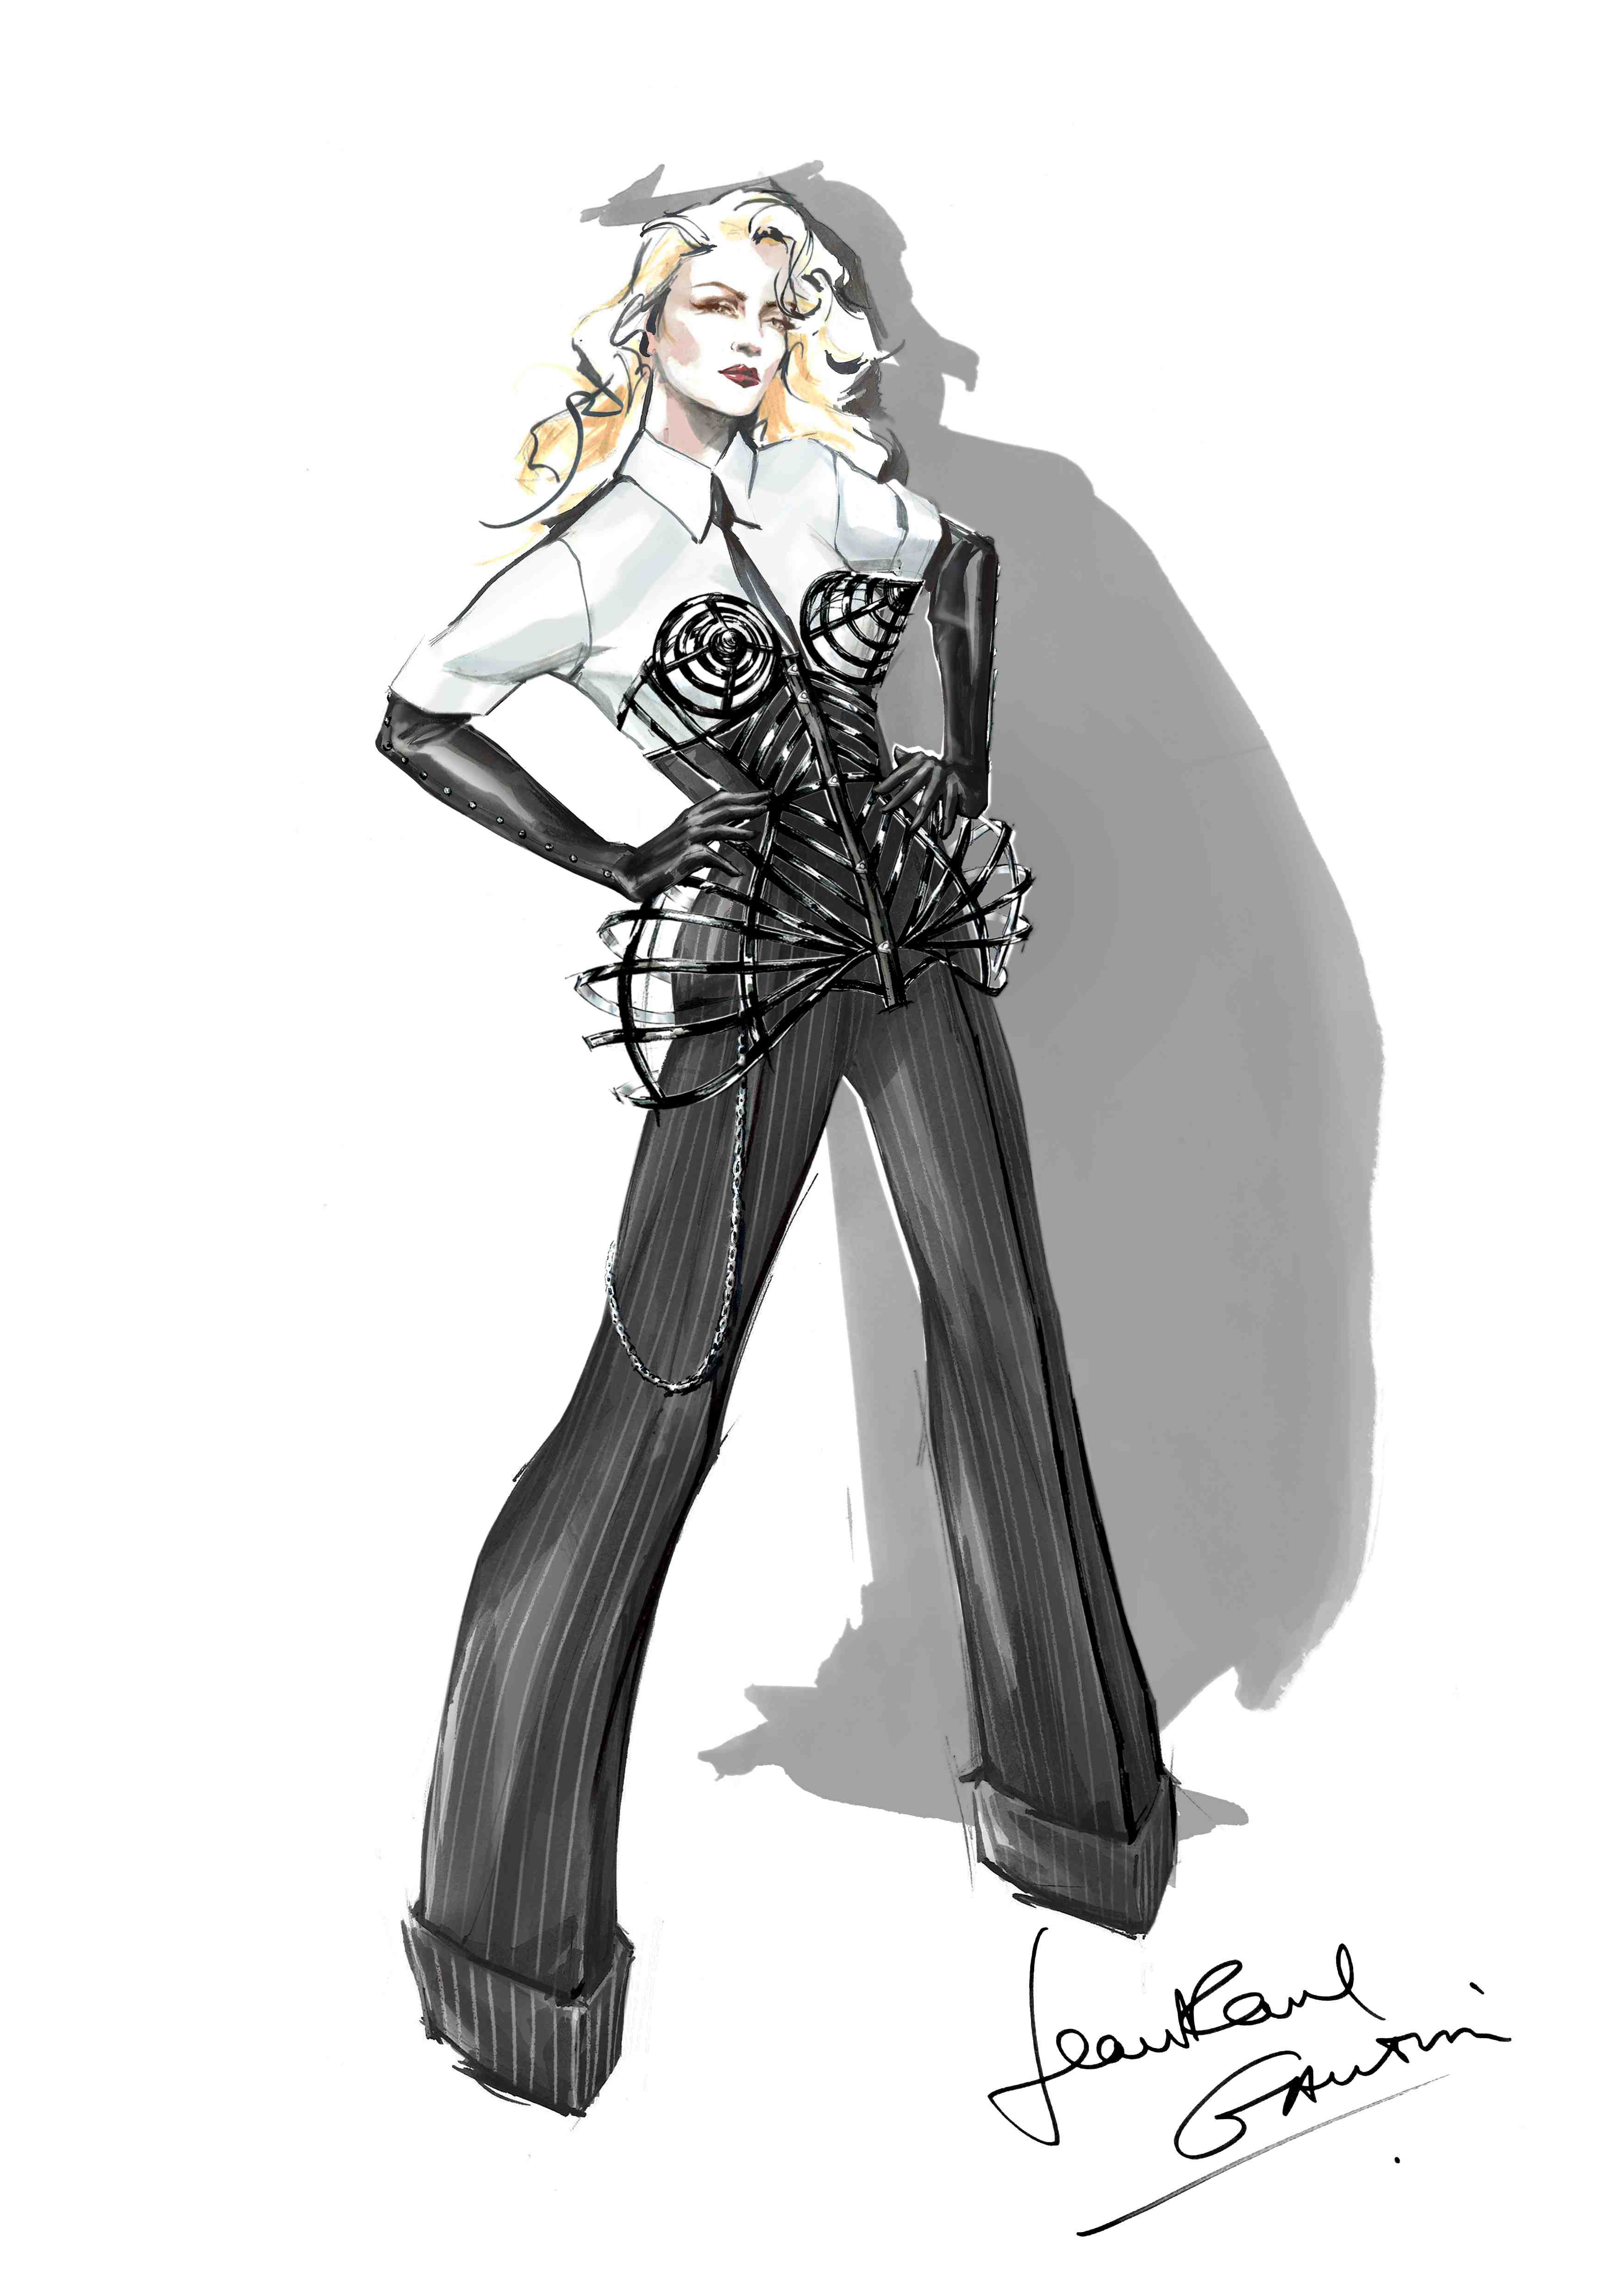 Dessin de Madonna en costume de scène par Jean Paul Gaultier